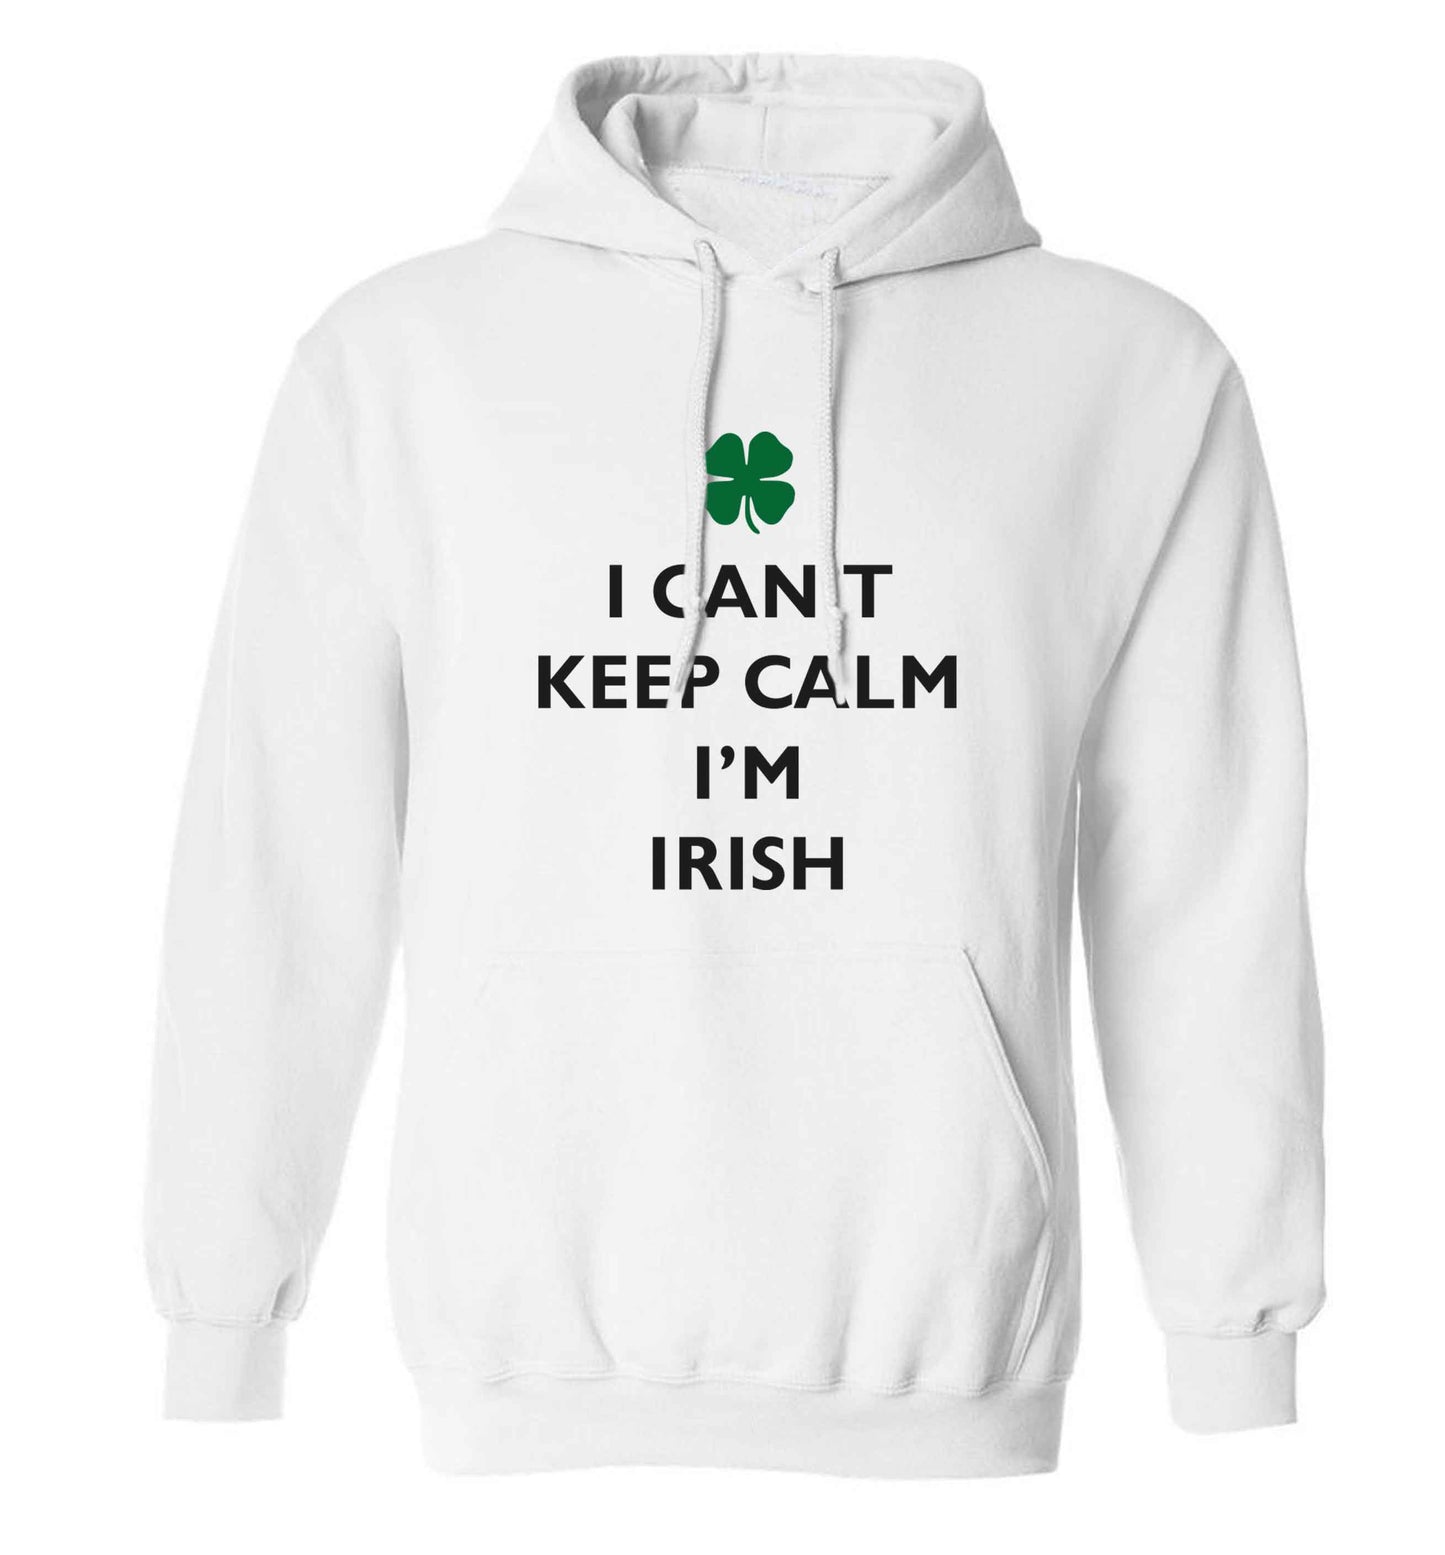 I can't keep calm I'm Irish adults unisex white hoodie 2XL